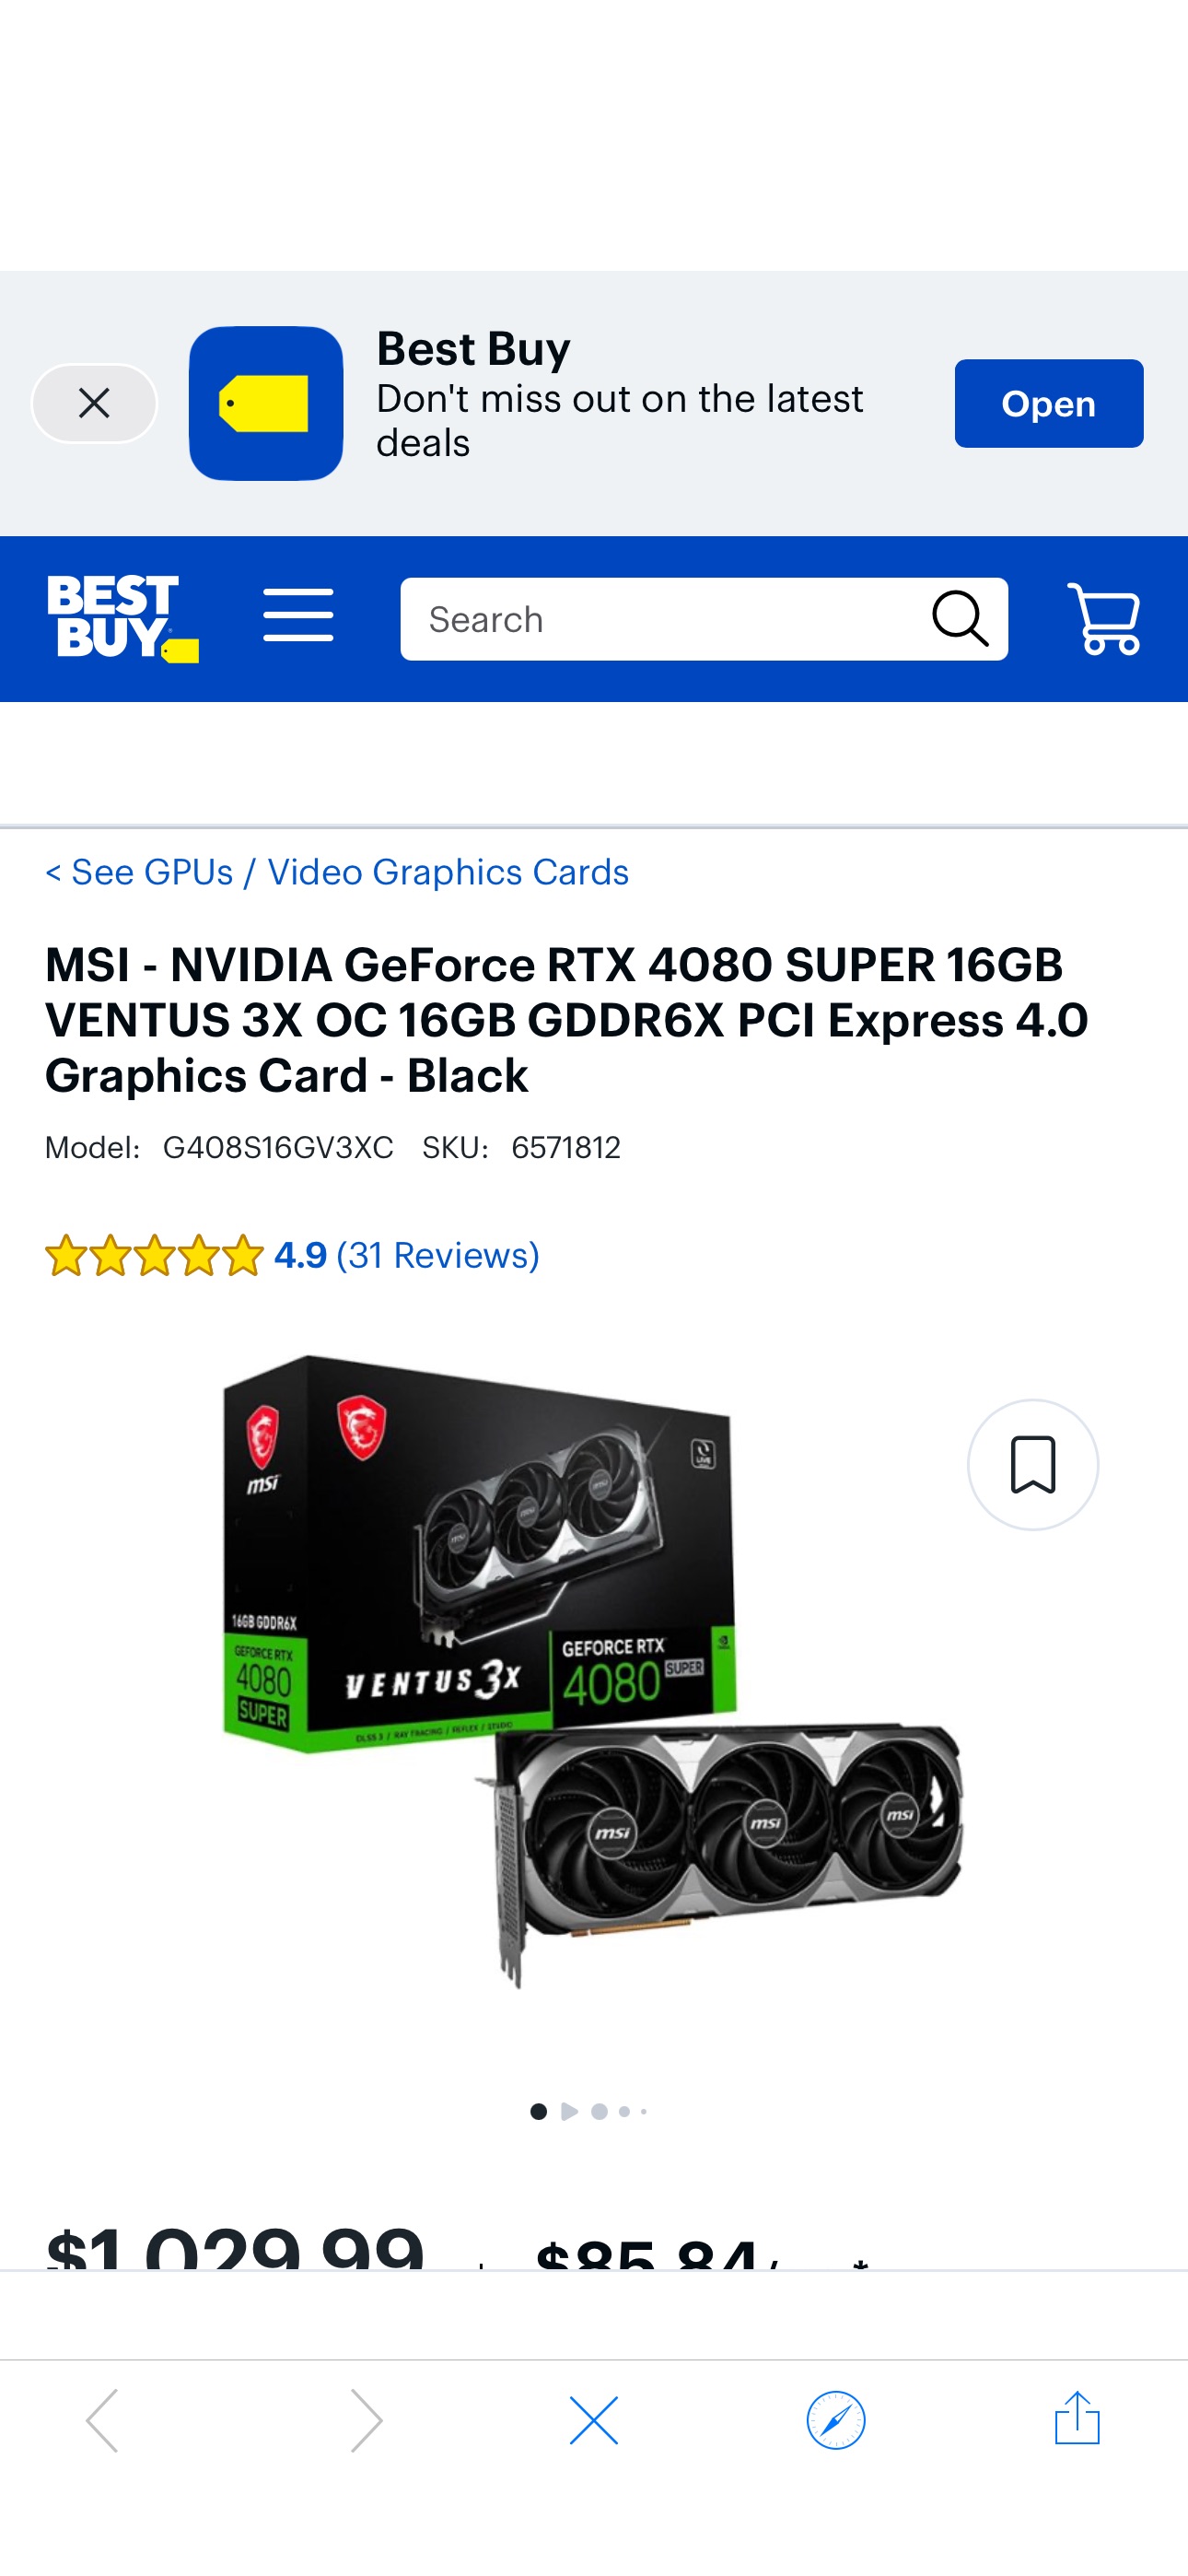 4080 super万图师现货MSI NVIDIA GeForce RTX 4080 SUPER 16GB VENTUS 3X OC 16GB GDDR6X PCI Express 4.0 Graphics Card Black G408S16GV3XC - Best Buy